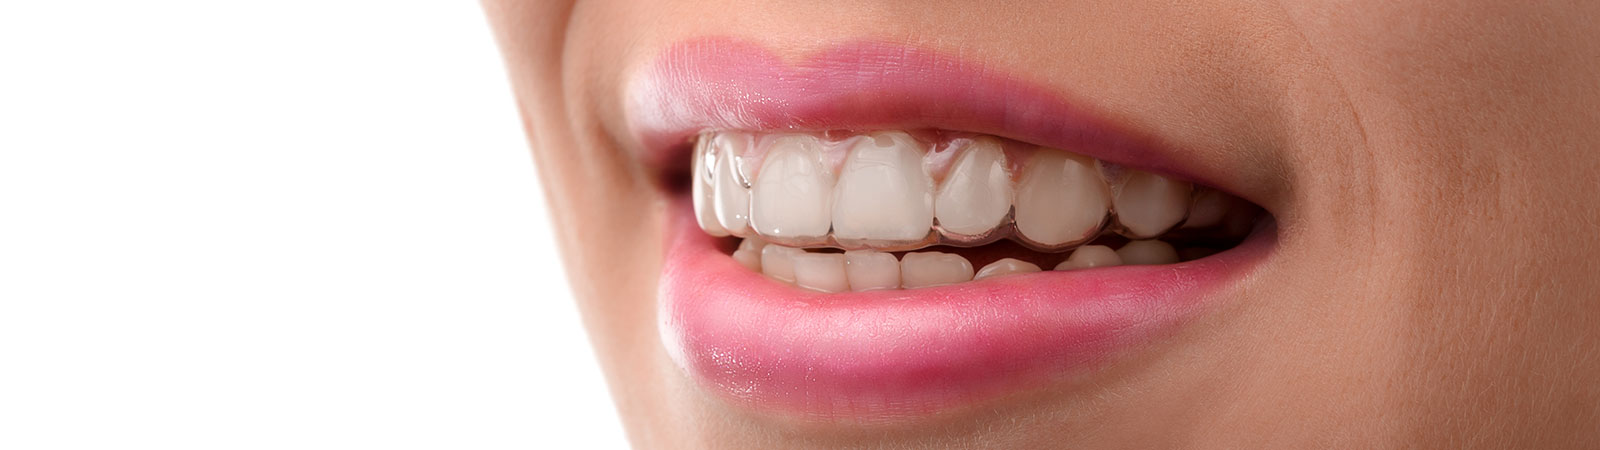 Invisalign Clear Braces Grand Rapids - Teeth Straightening